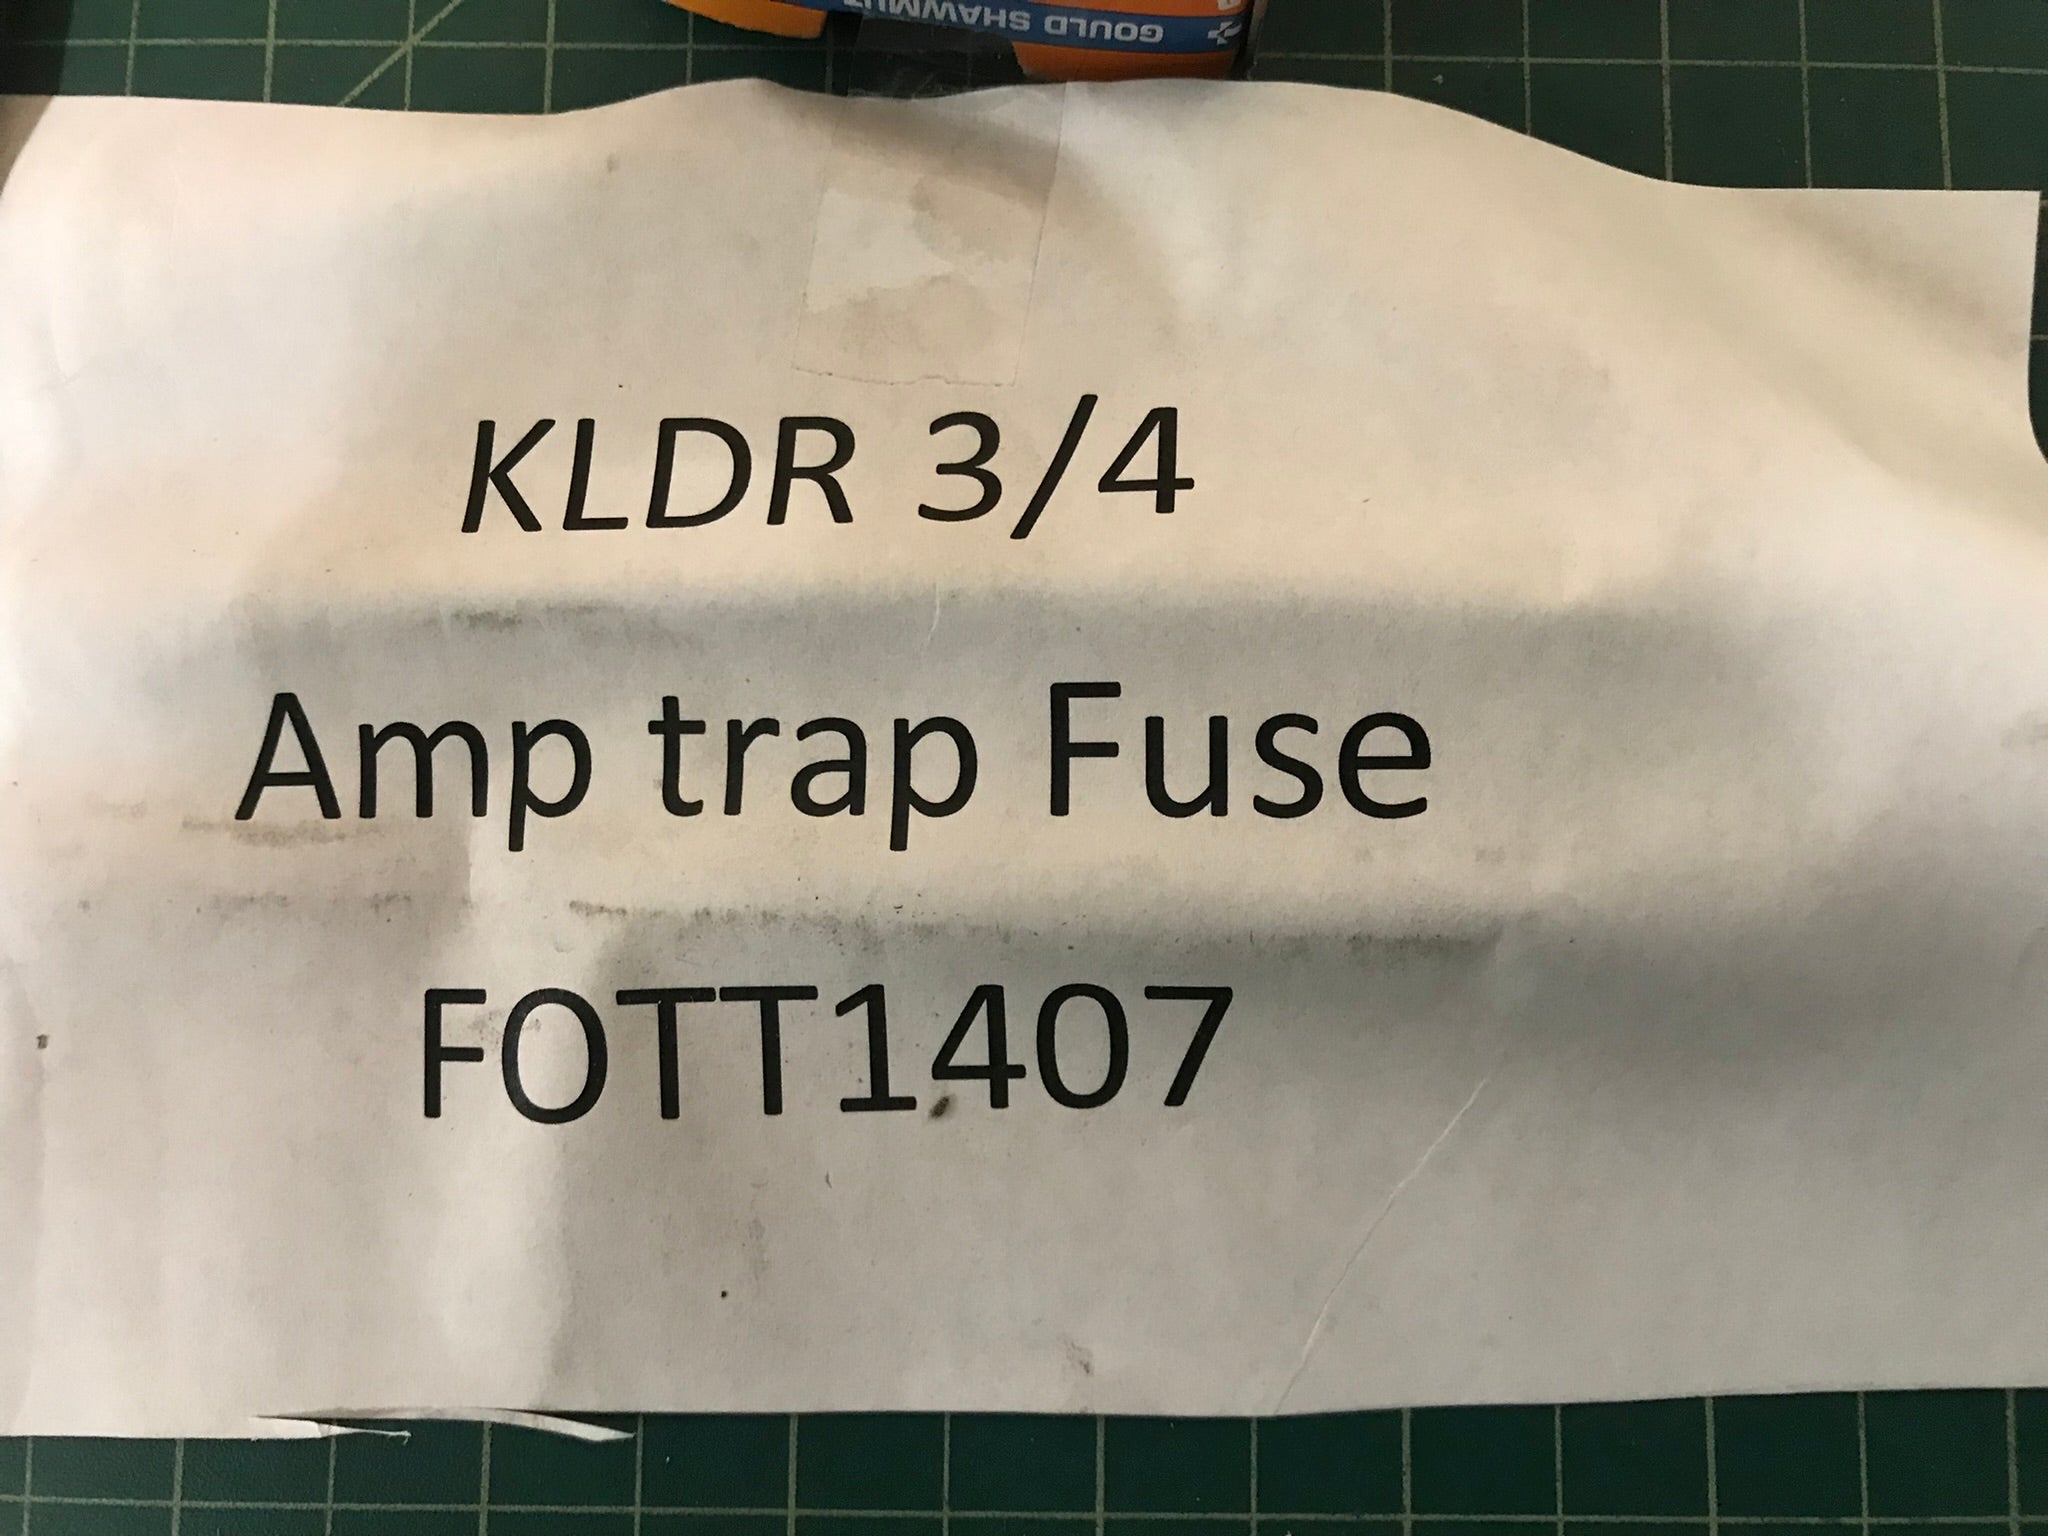 Amp trap Fuse